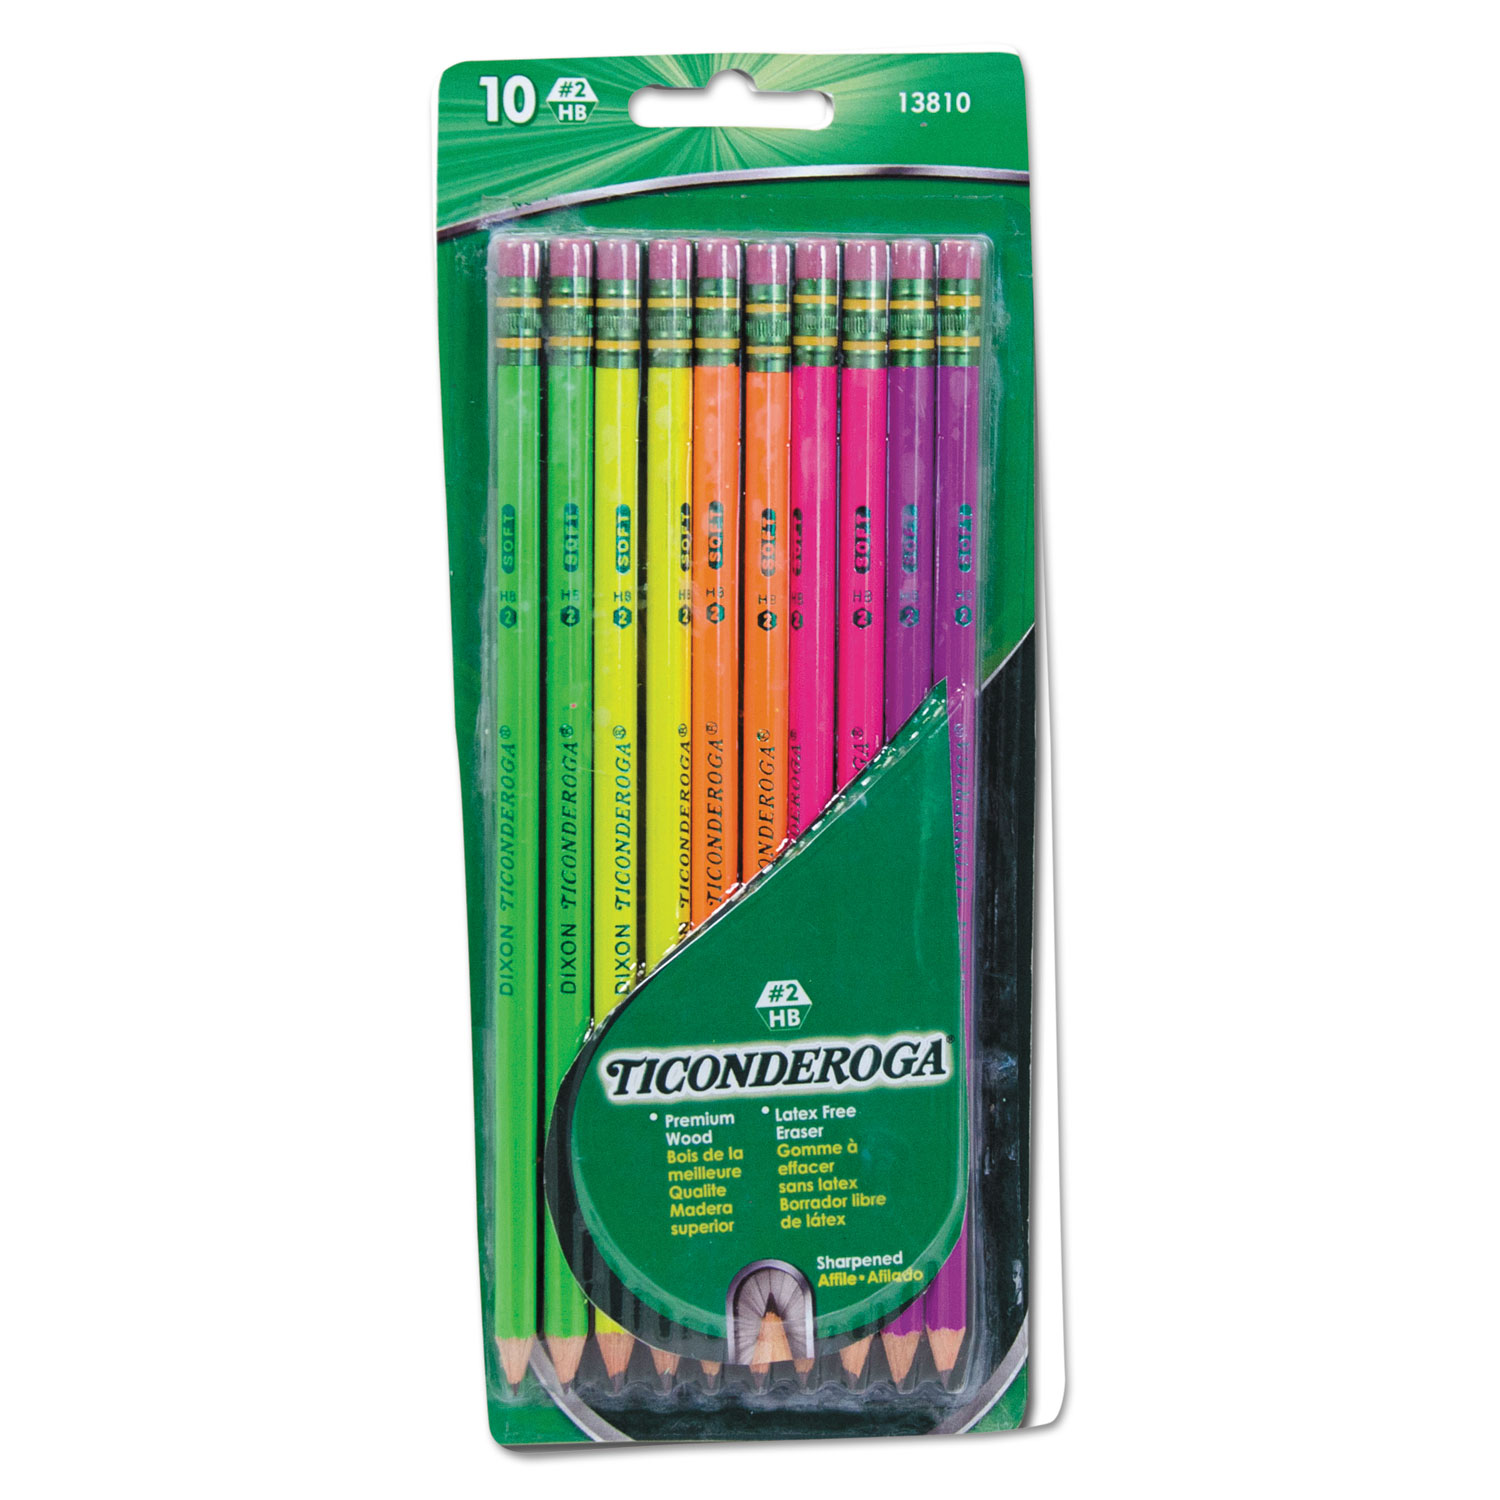 Cheap Neon Pencil Sharpeners - 12 Ct.